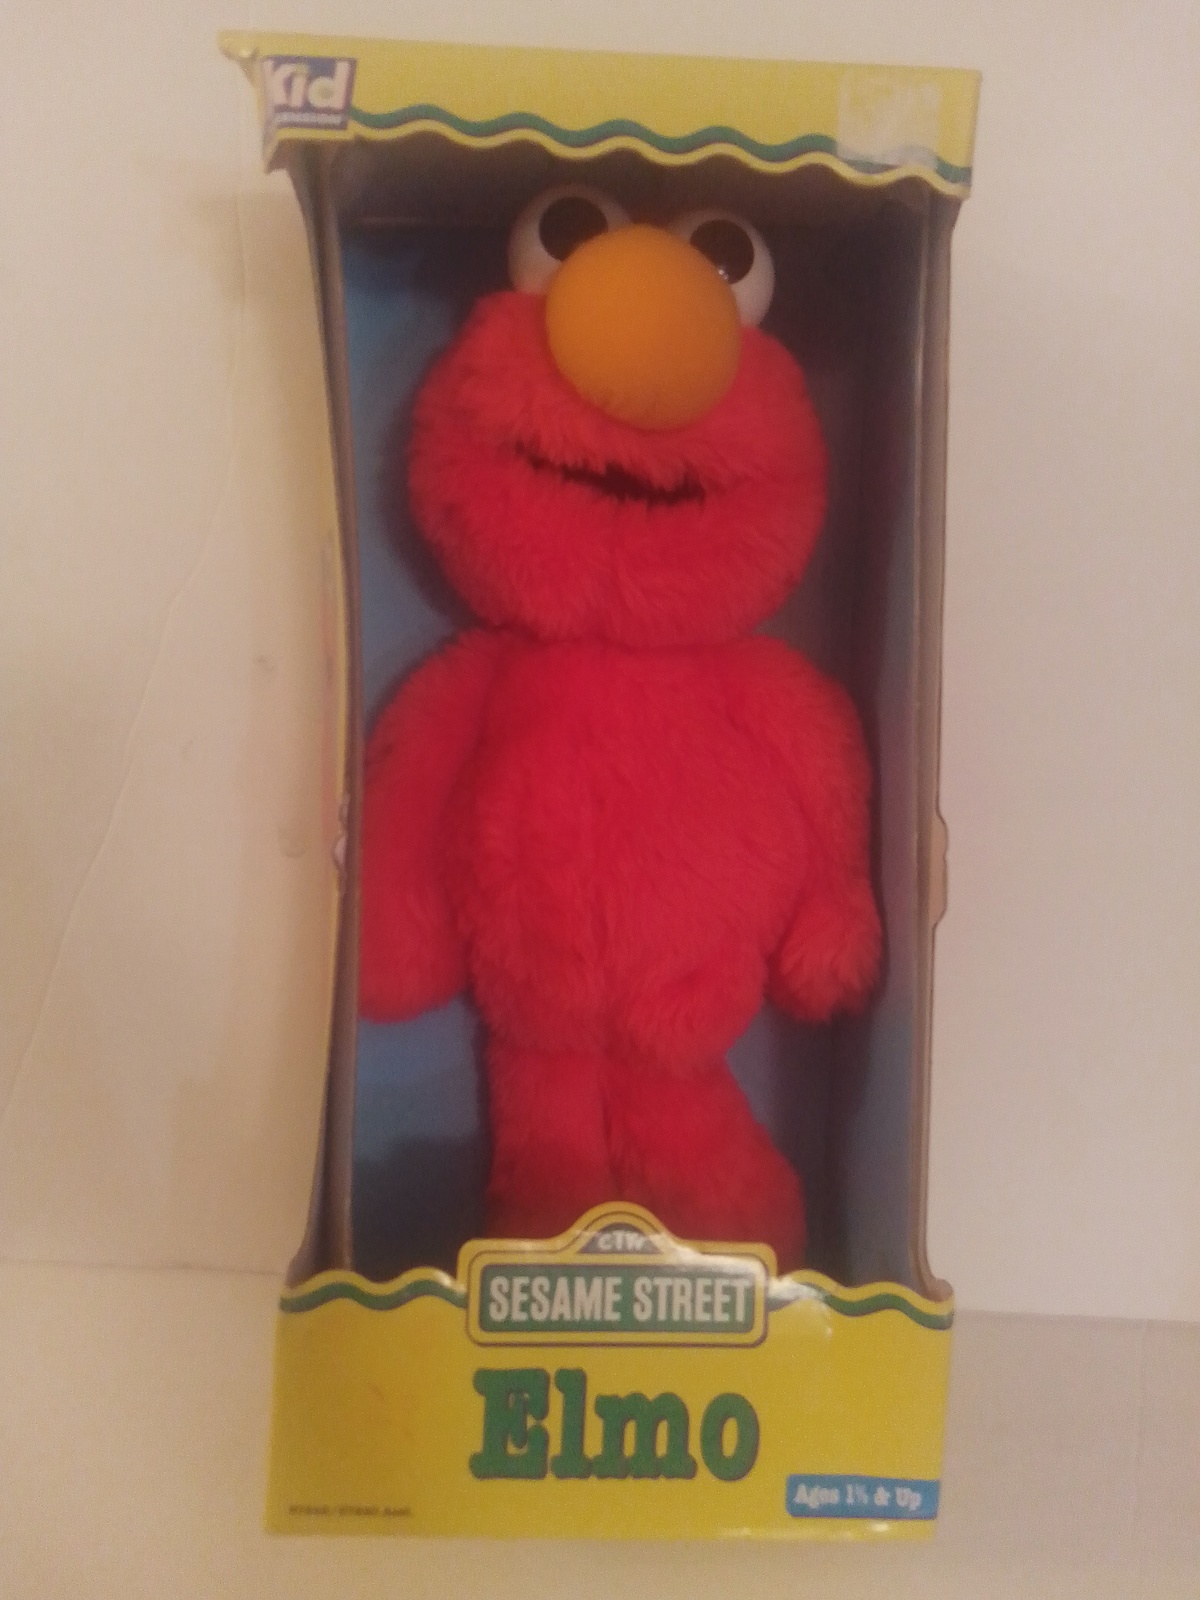 Sesame Street Elmo TYCO Kid Dimensions 1994 Vintage Large 15" Plush Toy - $99.99